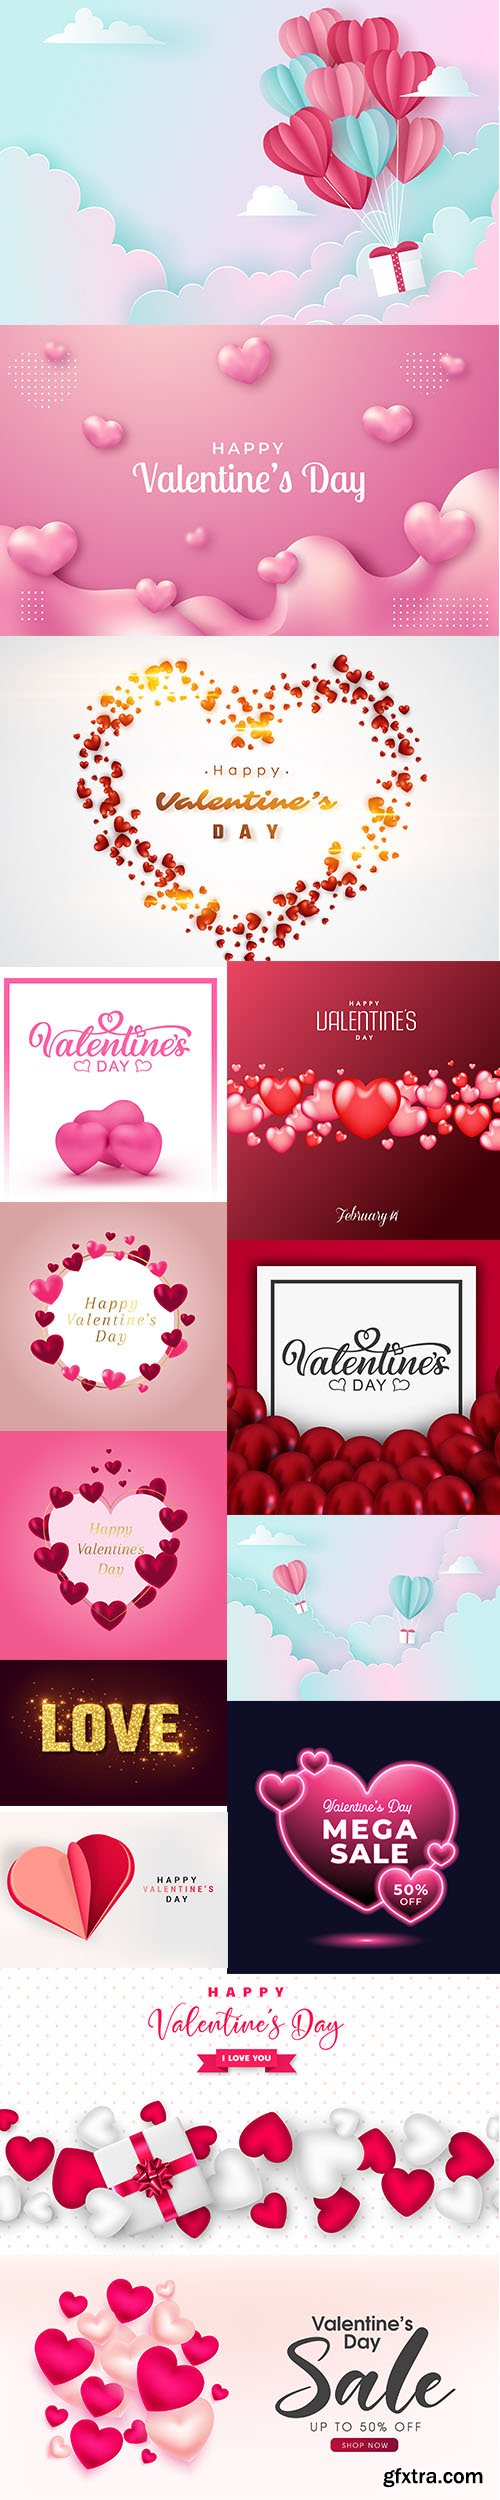 Vector Set of Romantic Valentines Day Illustrations